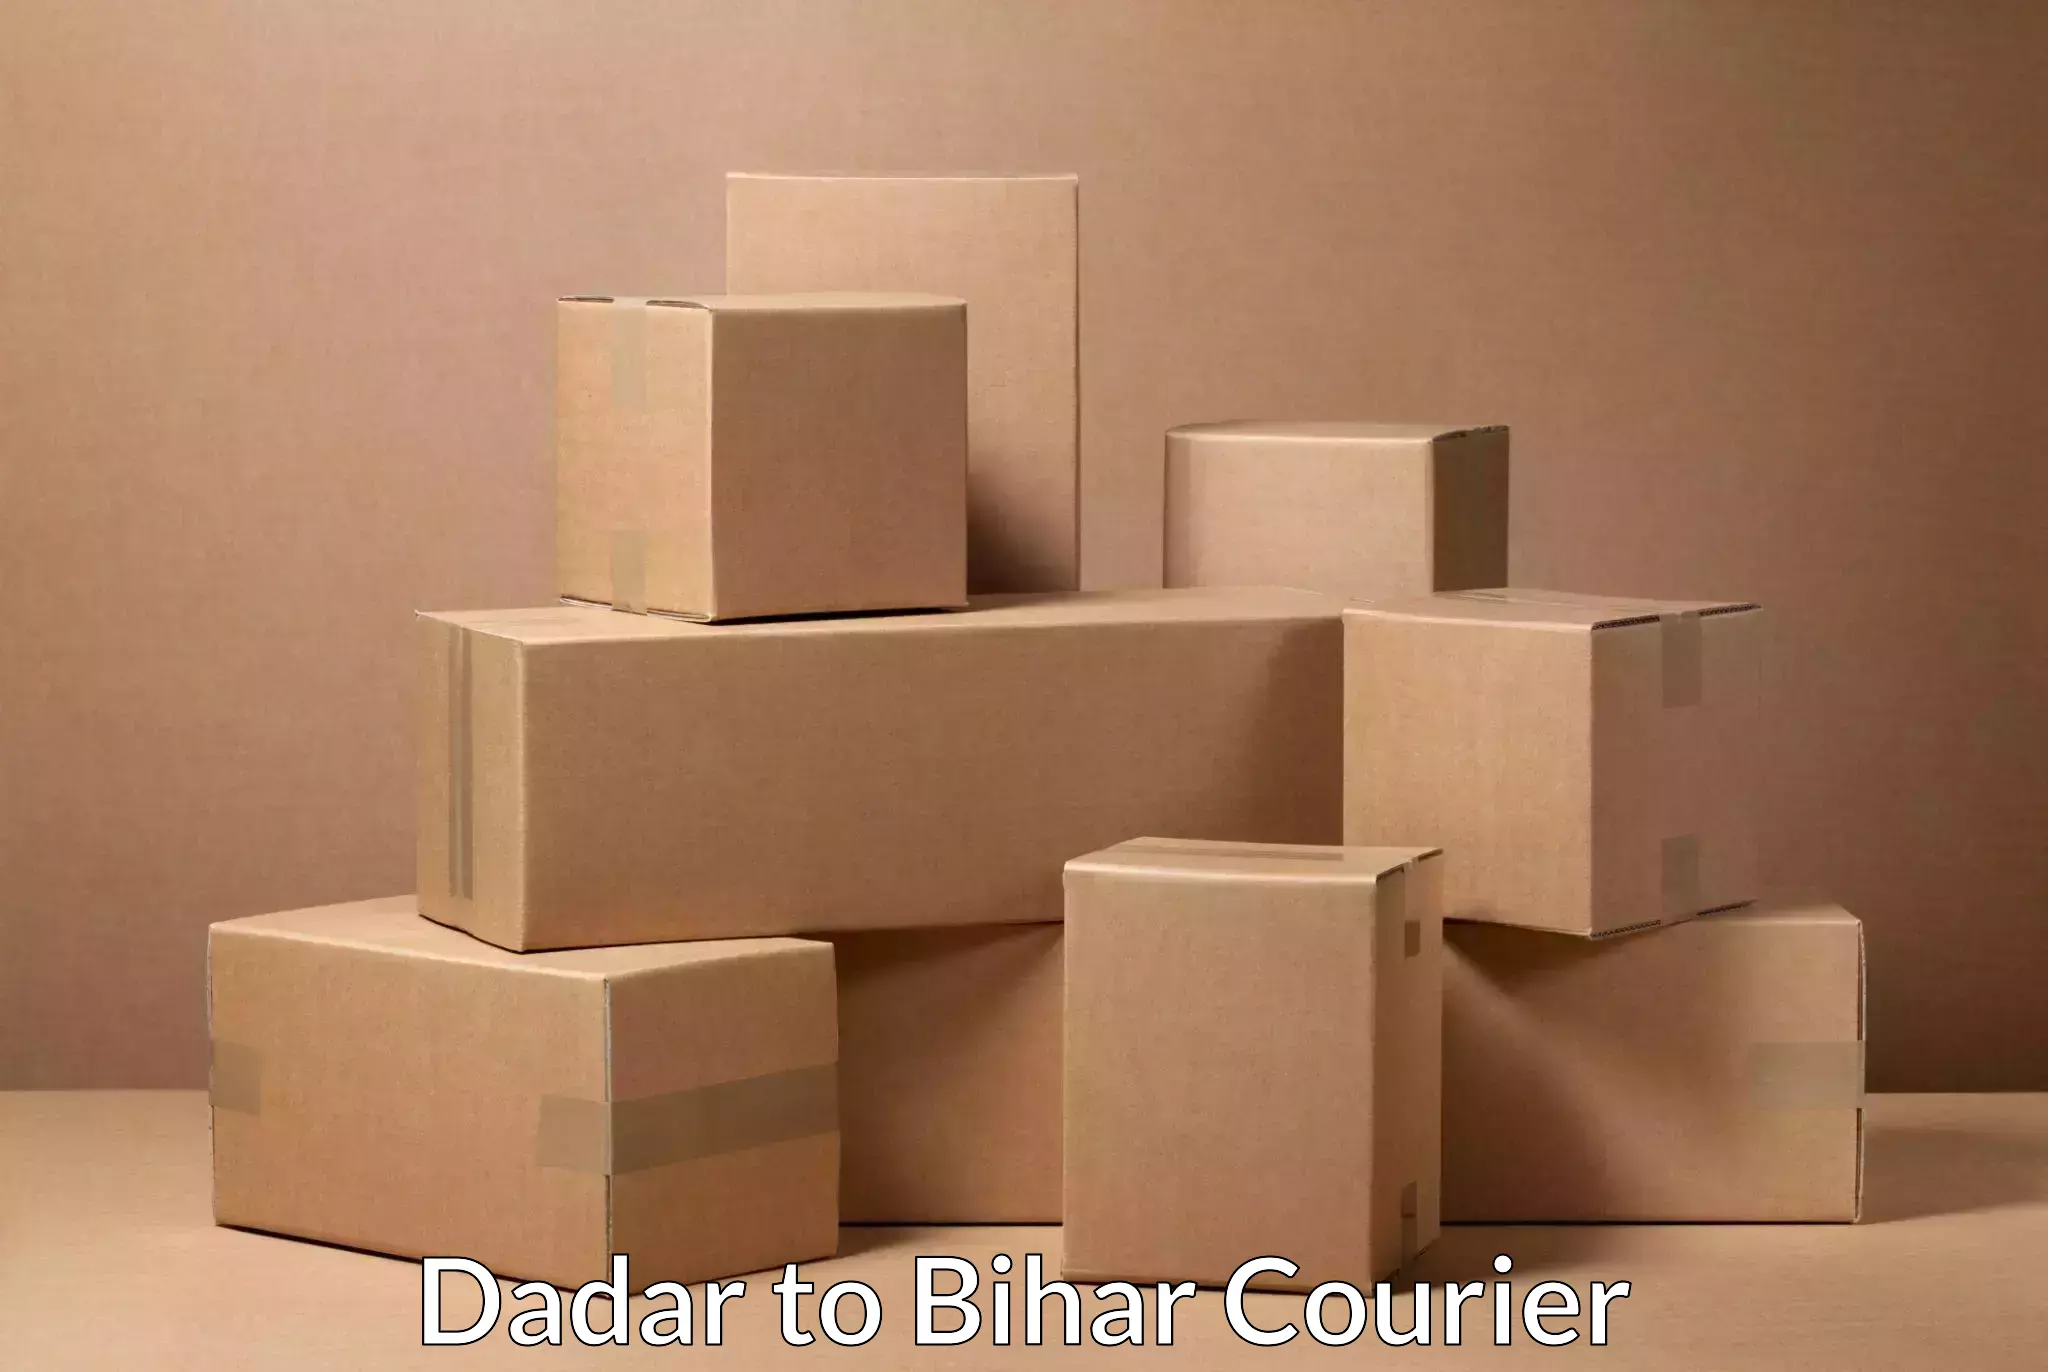 User-friendly delivery service Dadar to Bihar